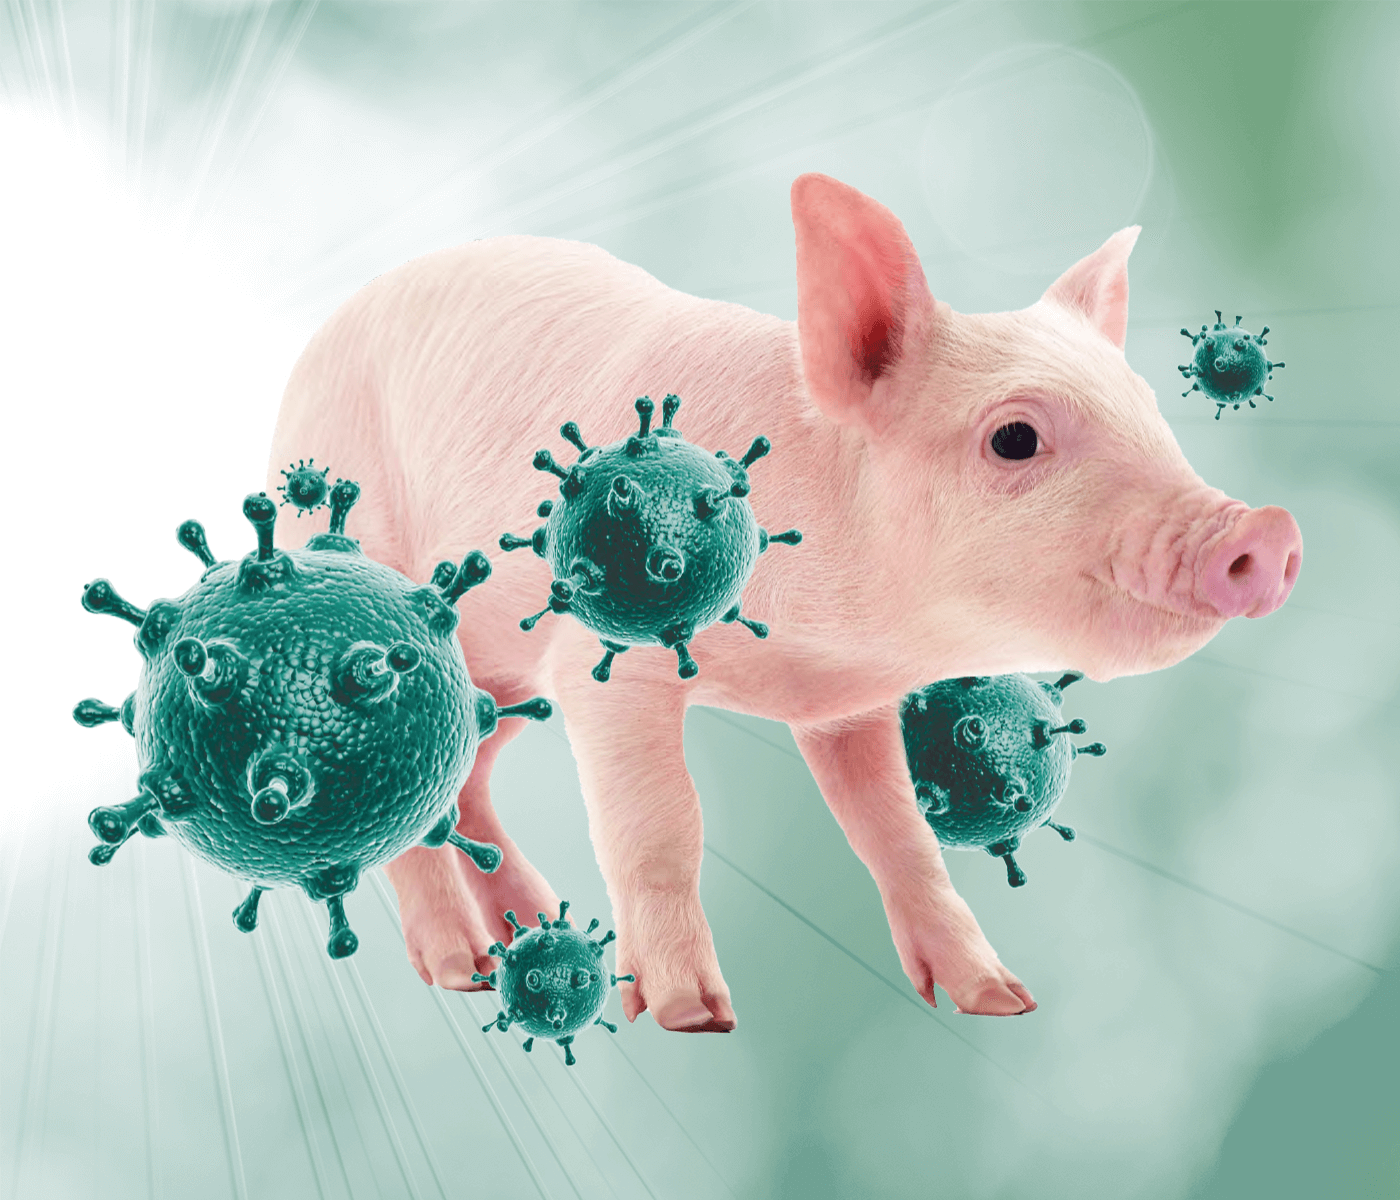 Desenmascarando al linaje pandémico del Virus de la Influenza Porcina...